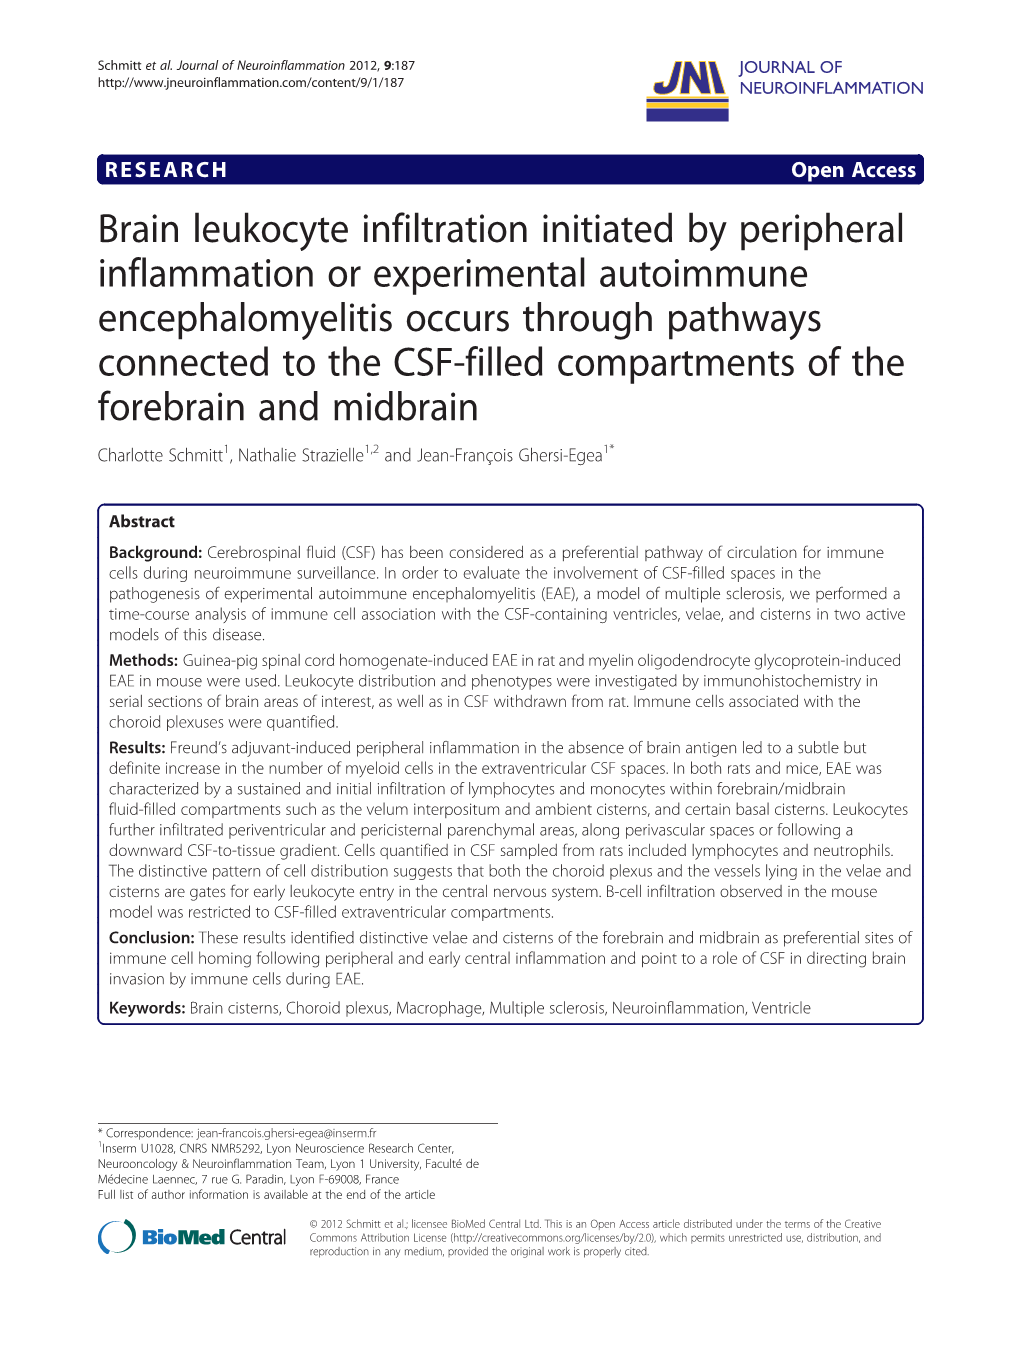 Brain Leukocyte Infiltration Initiated by Peripheral Inflammation Or Experimental Autoimmune Encephalomyelitis Occurs Through Pa